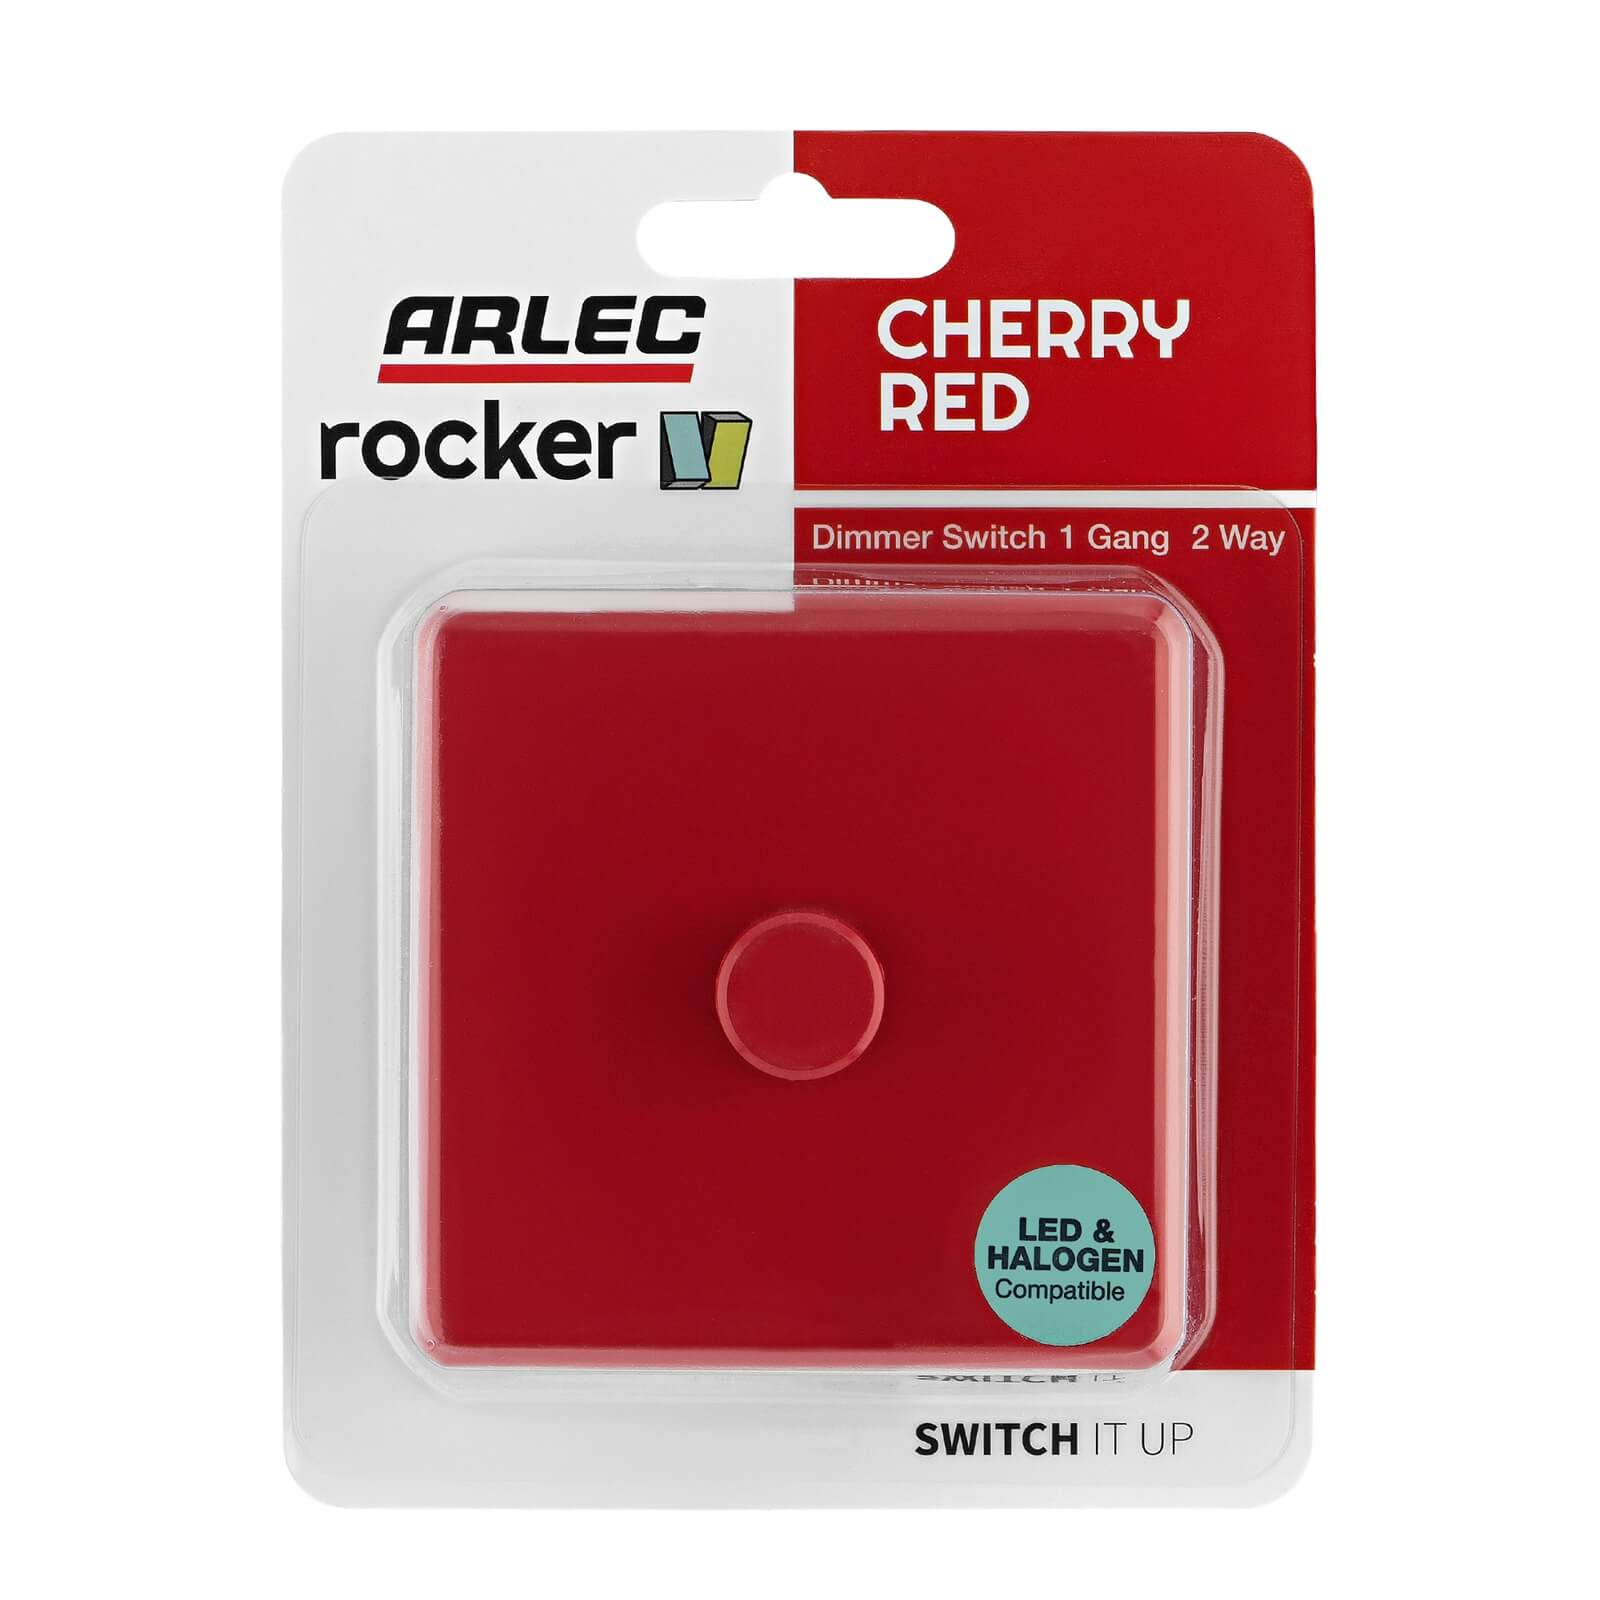 Arlec Rocker 1 Gang 2 Way Cherry Red Dimmer switch